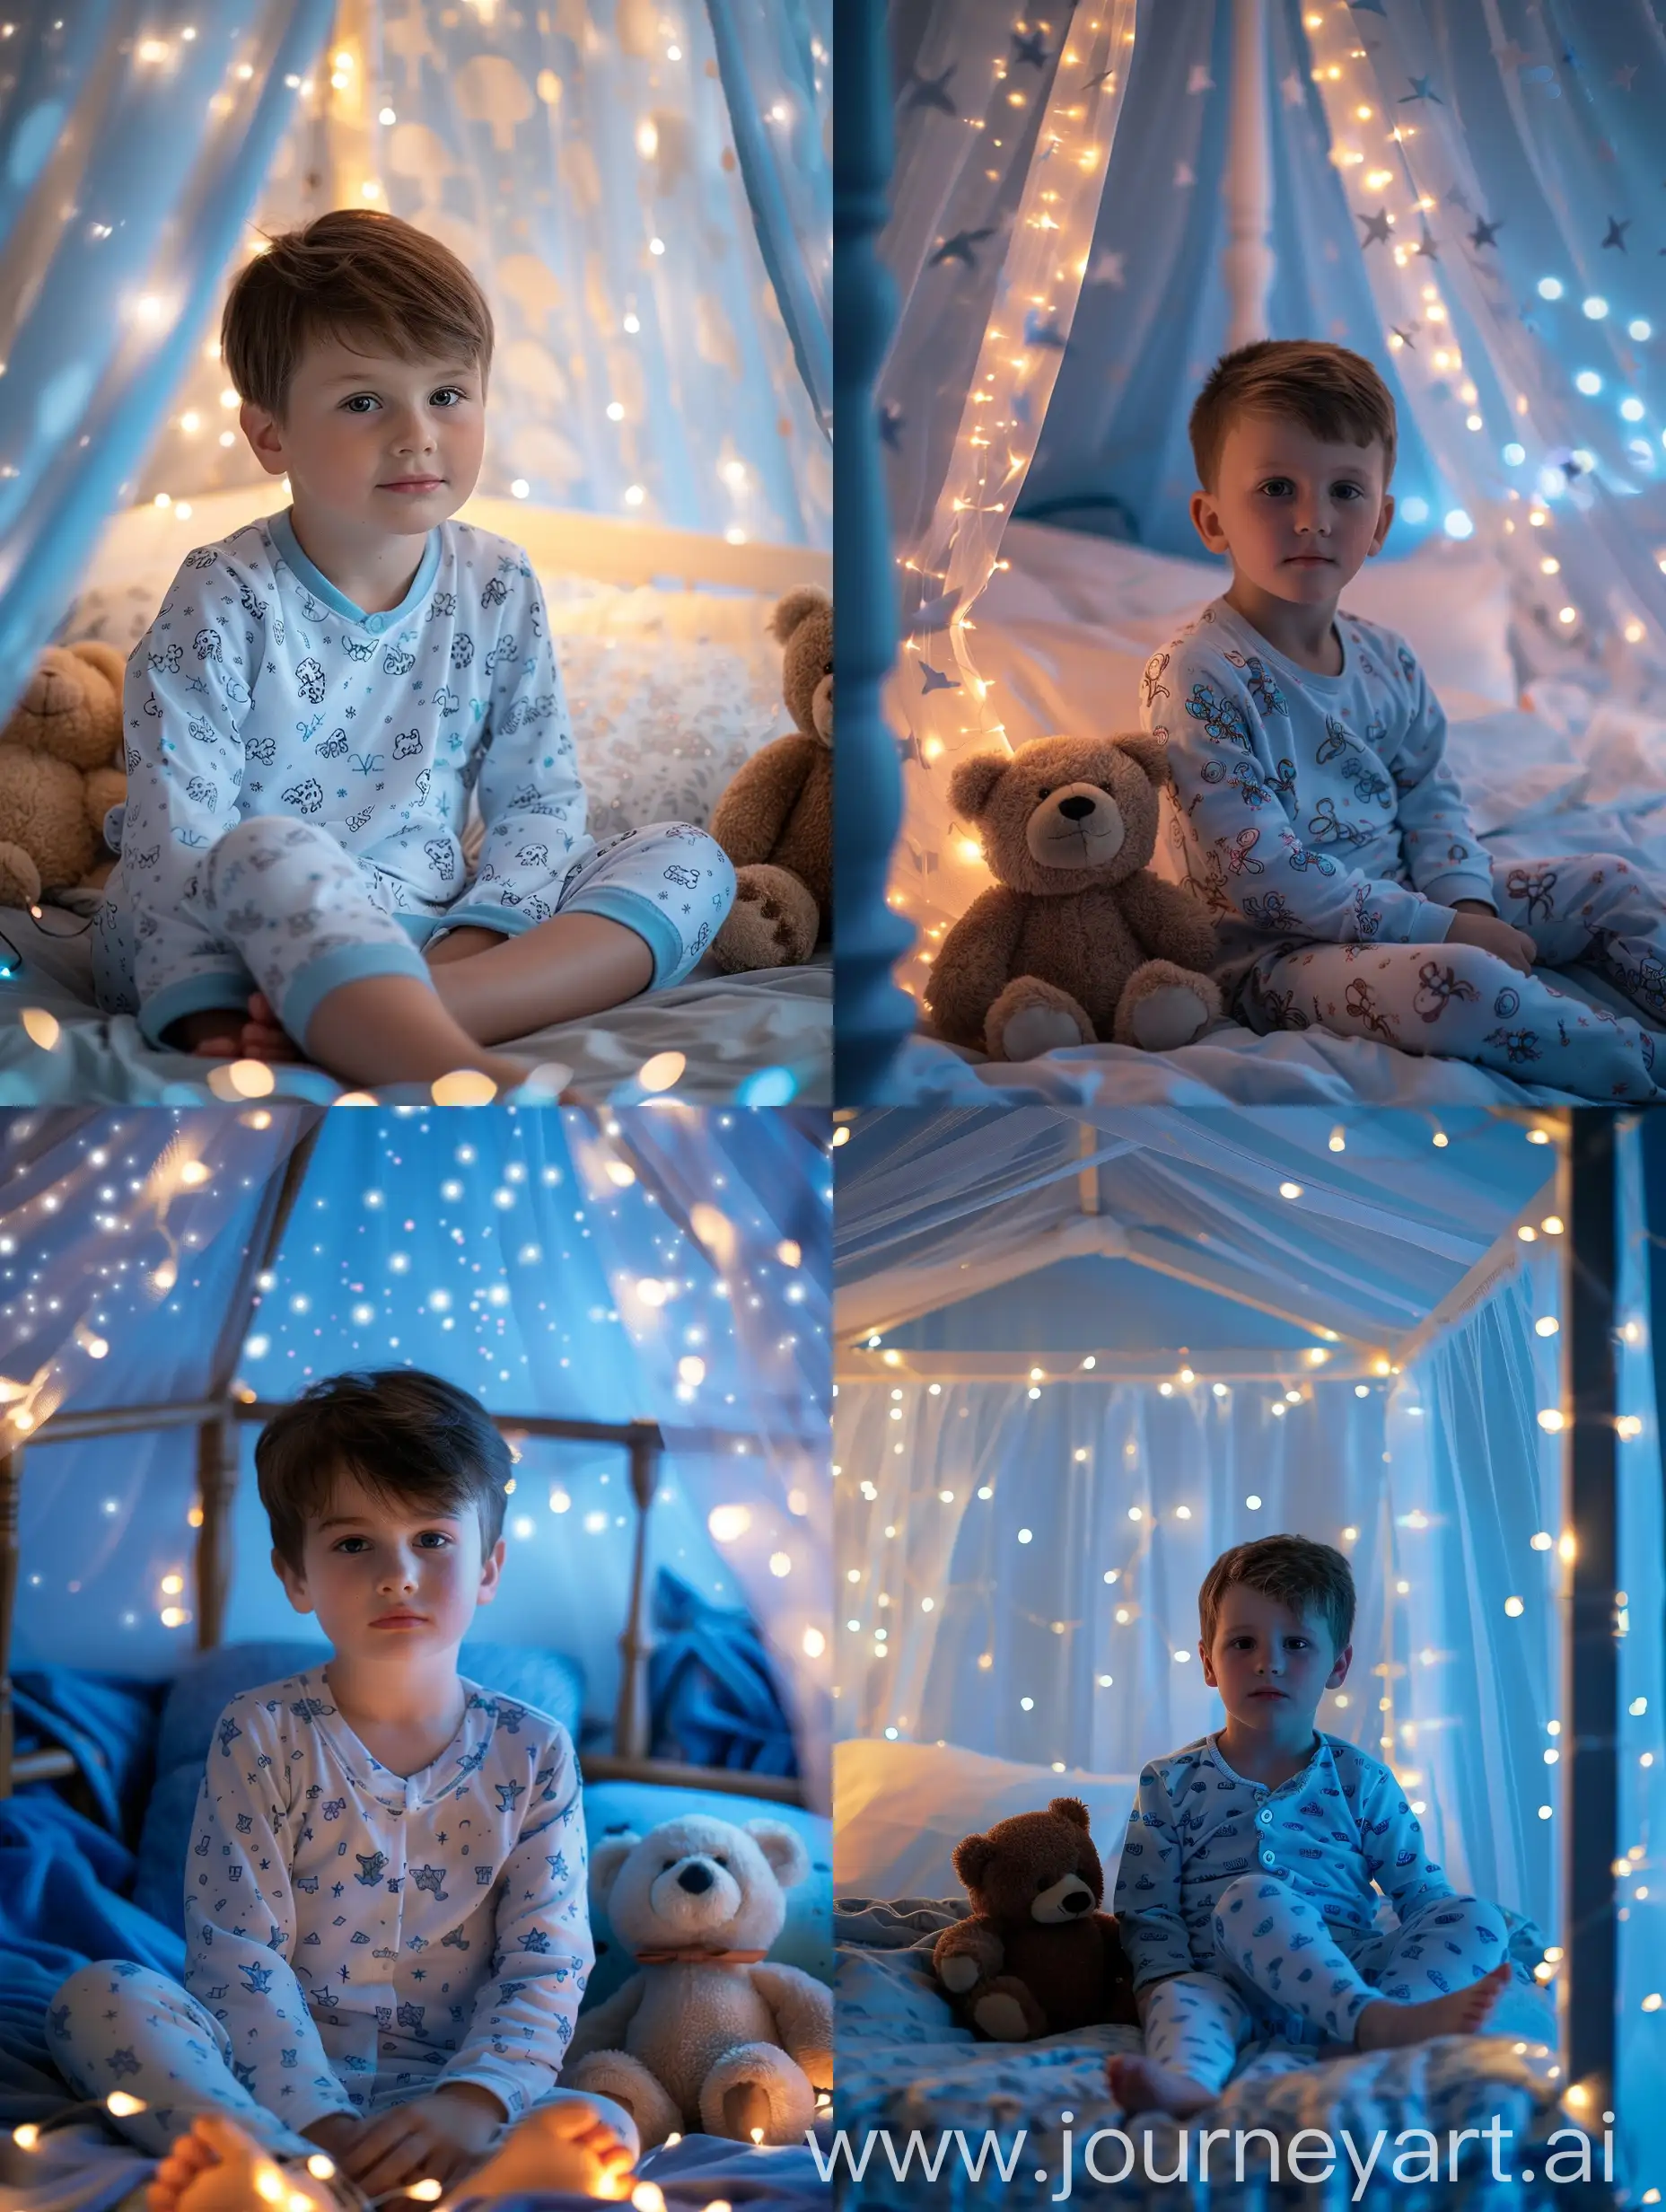 Cozy-Bedtime-Scene-Young-Boy-in-Pajamas-with-Teddy-Bear